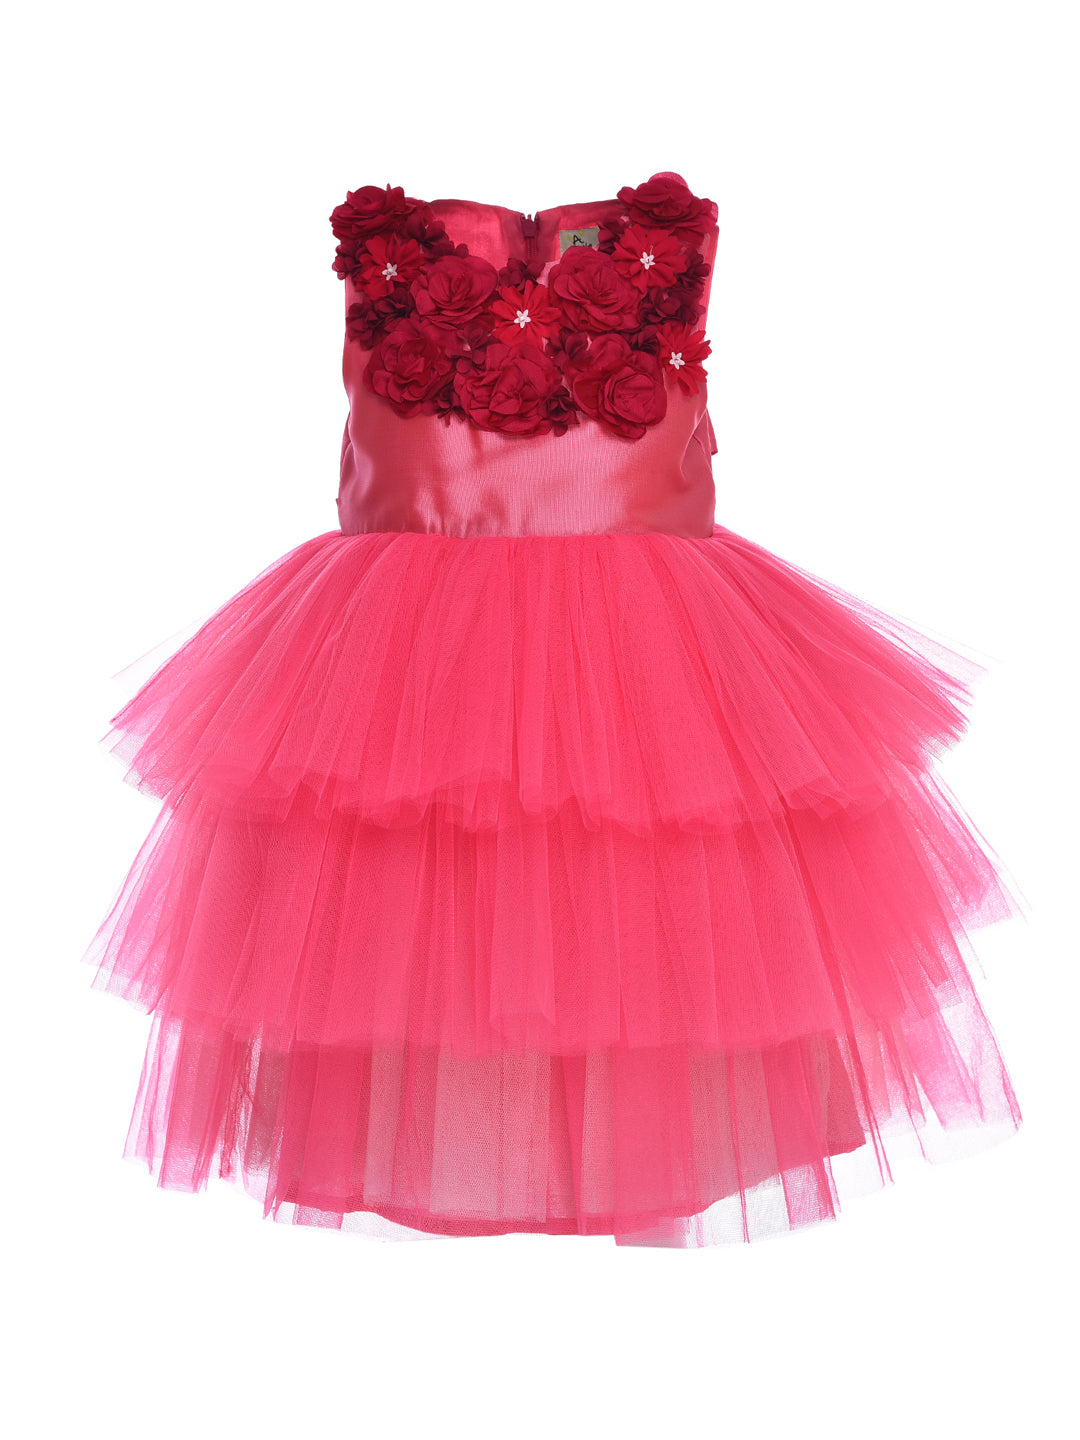 Garland Rose Dress